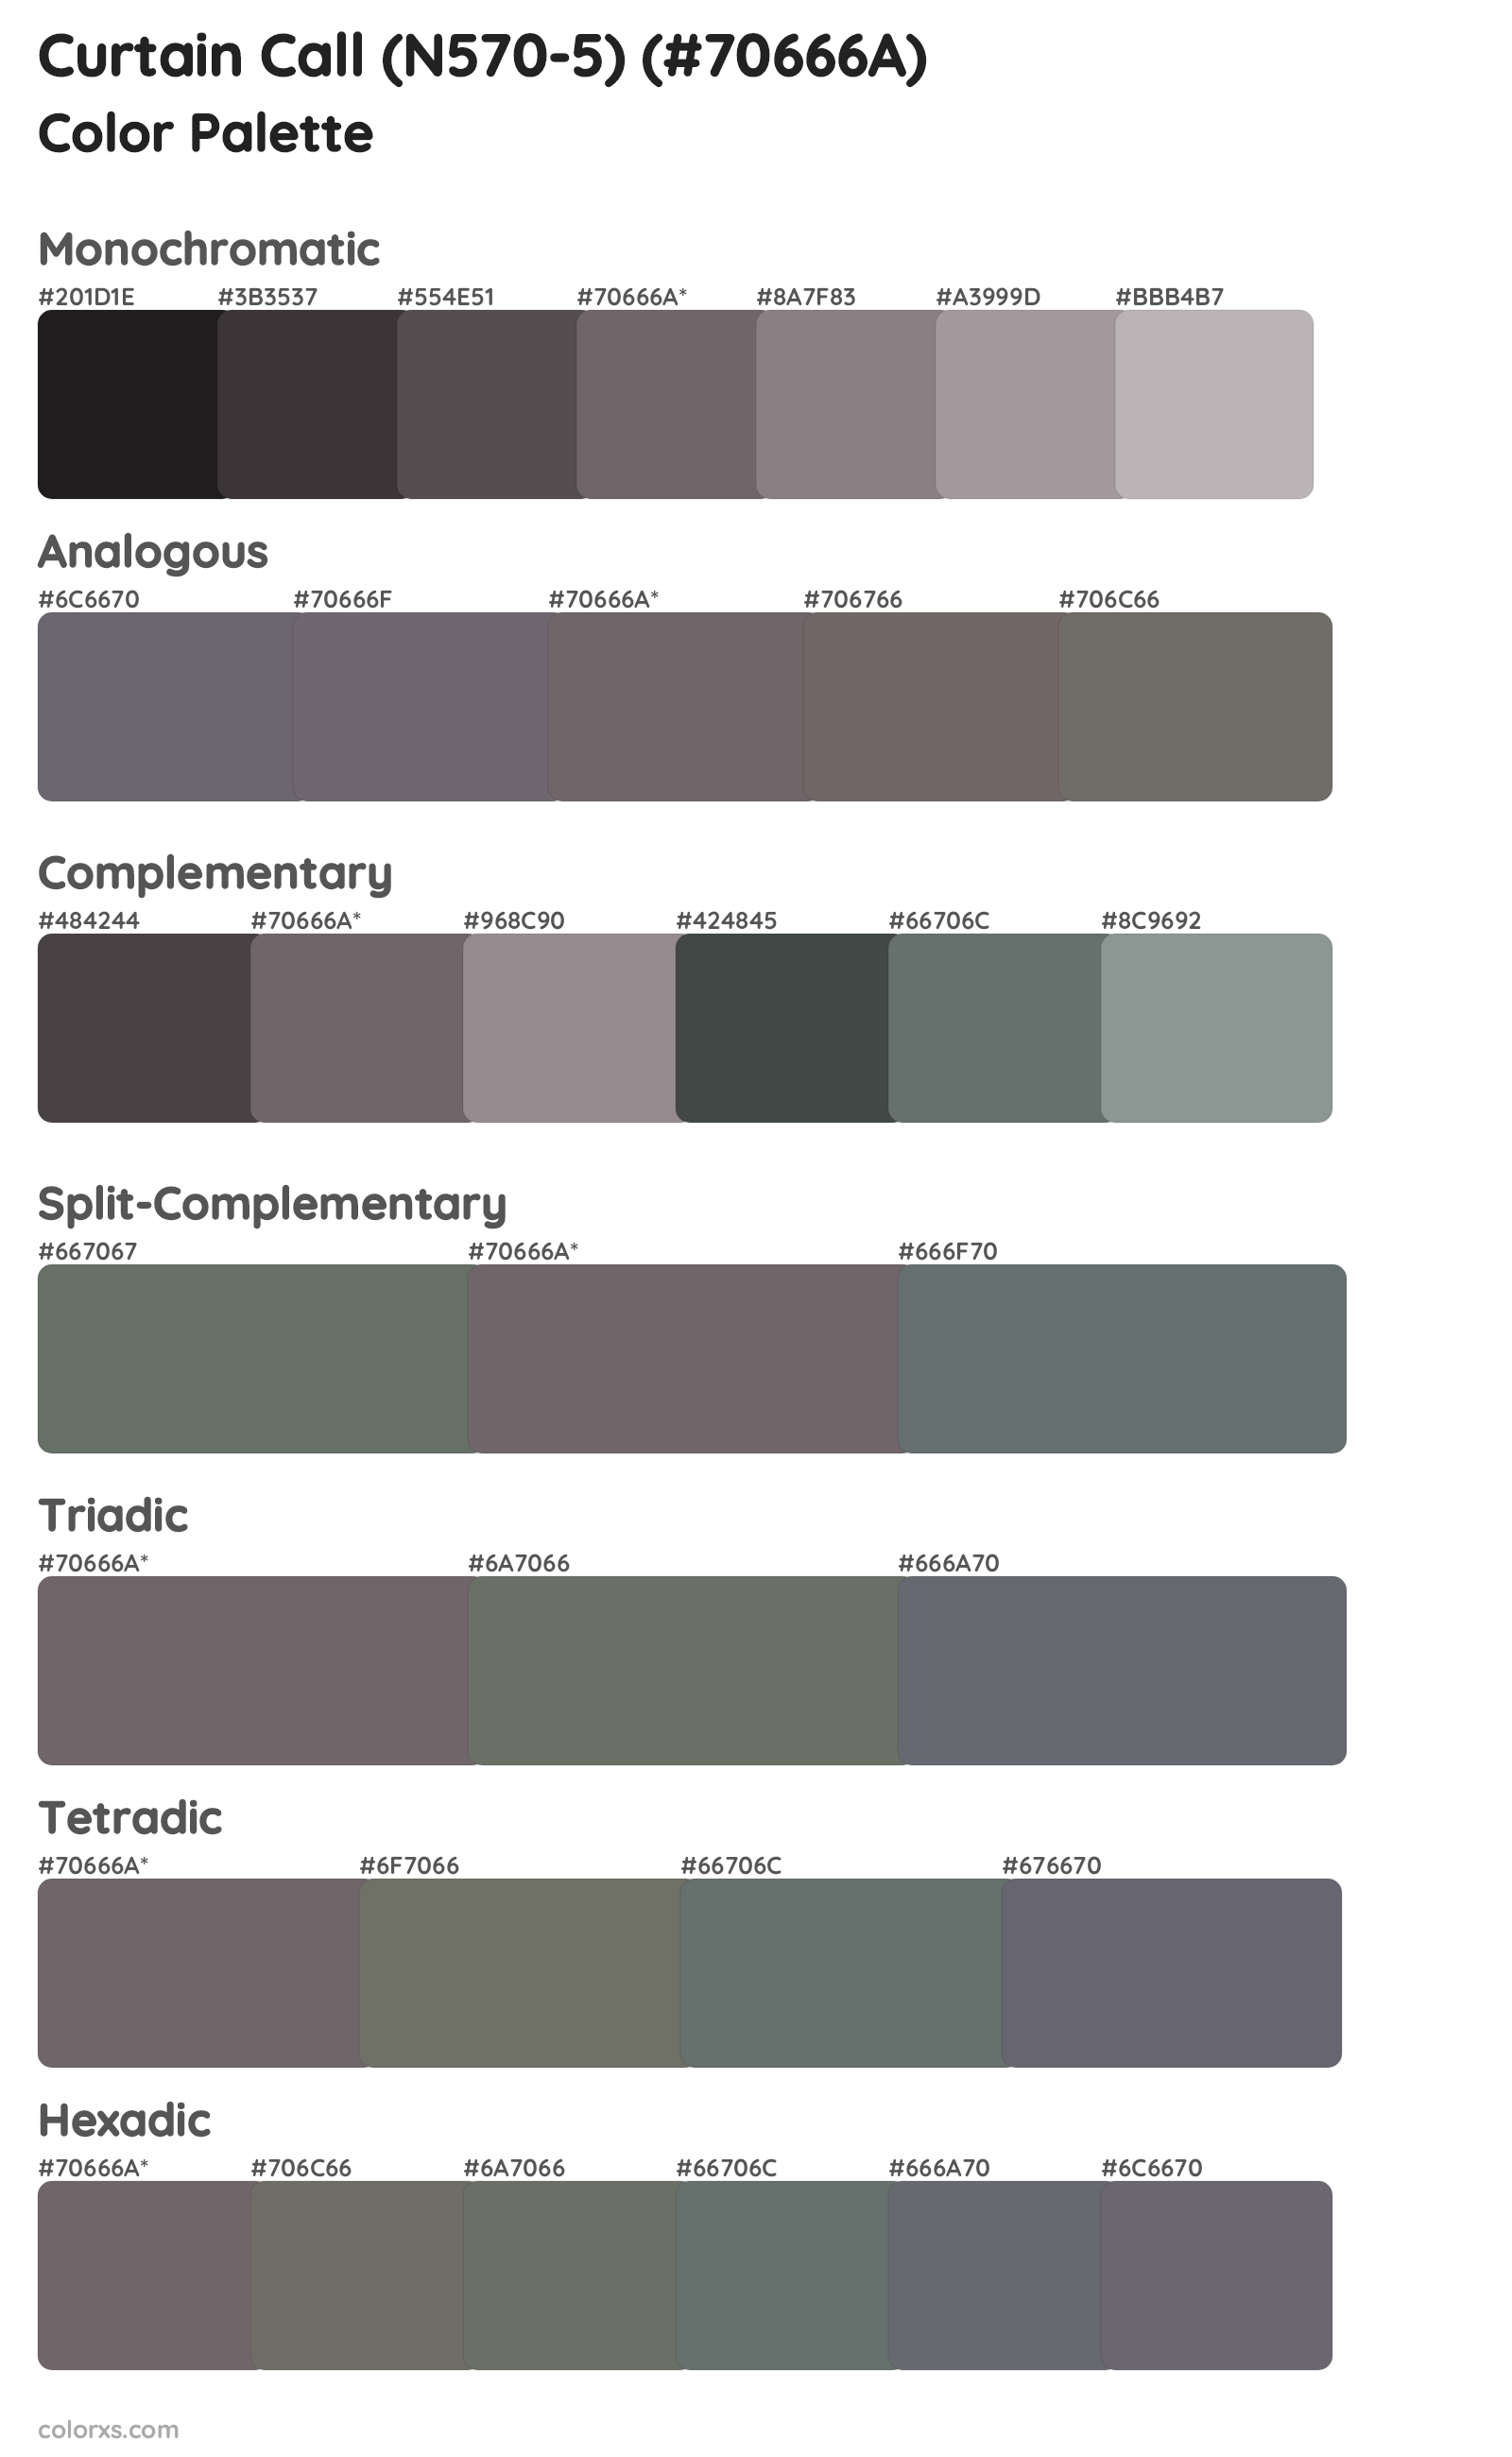 Curtain Call (N570-5) Color Scheme Palettes